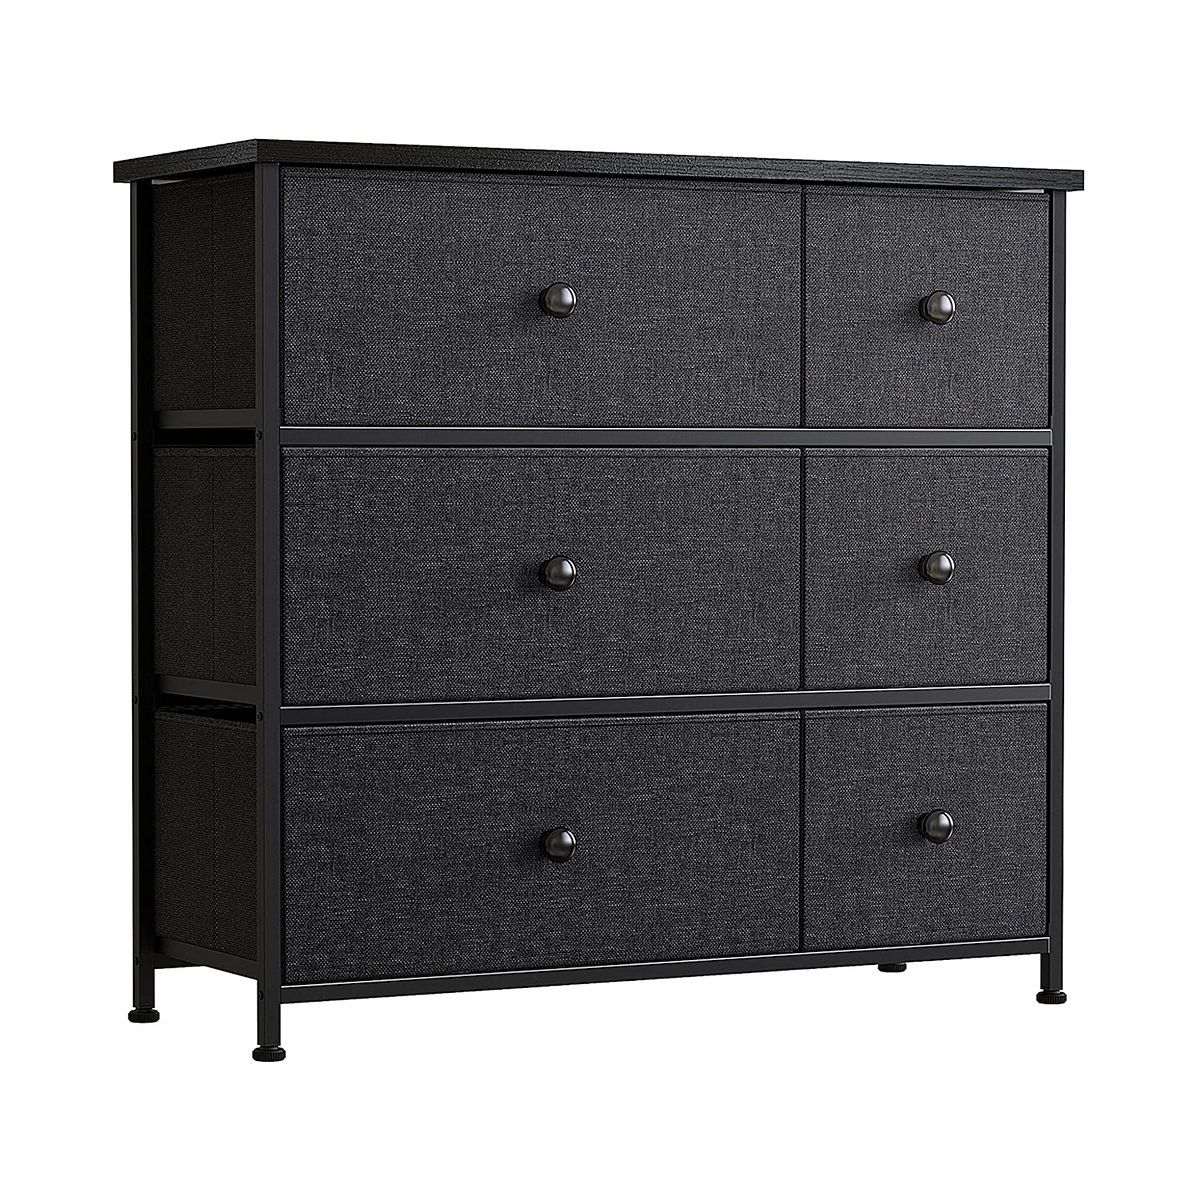 REAHOME 6 Drawer Steel Frame Bedroom Storage Organizer Chest Dresser, Black Grey | Kohl's